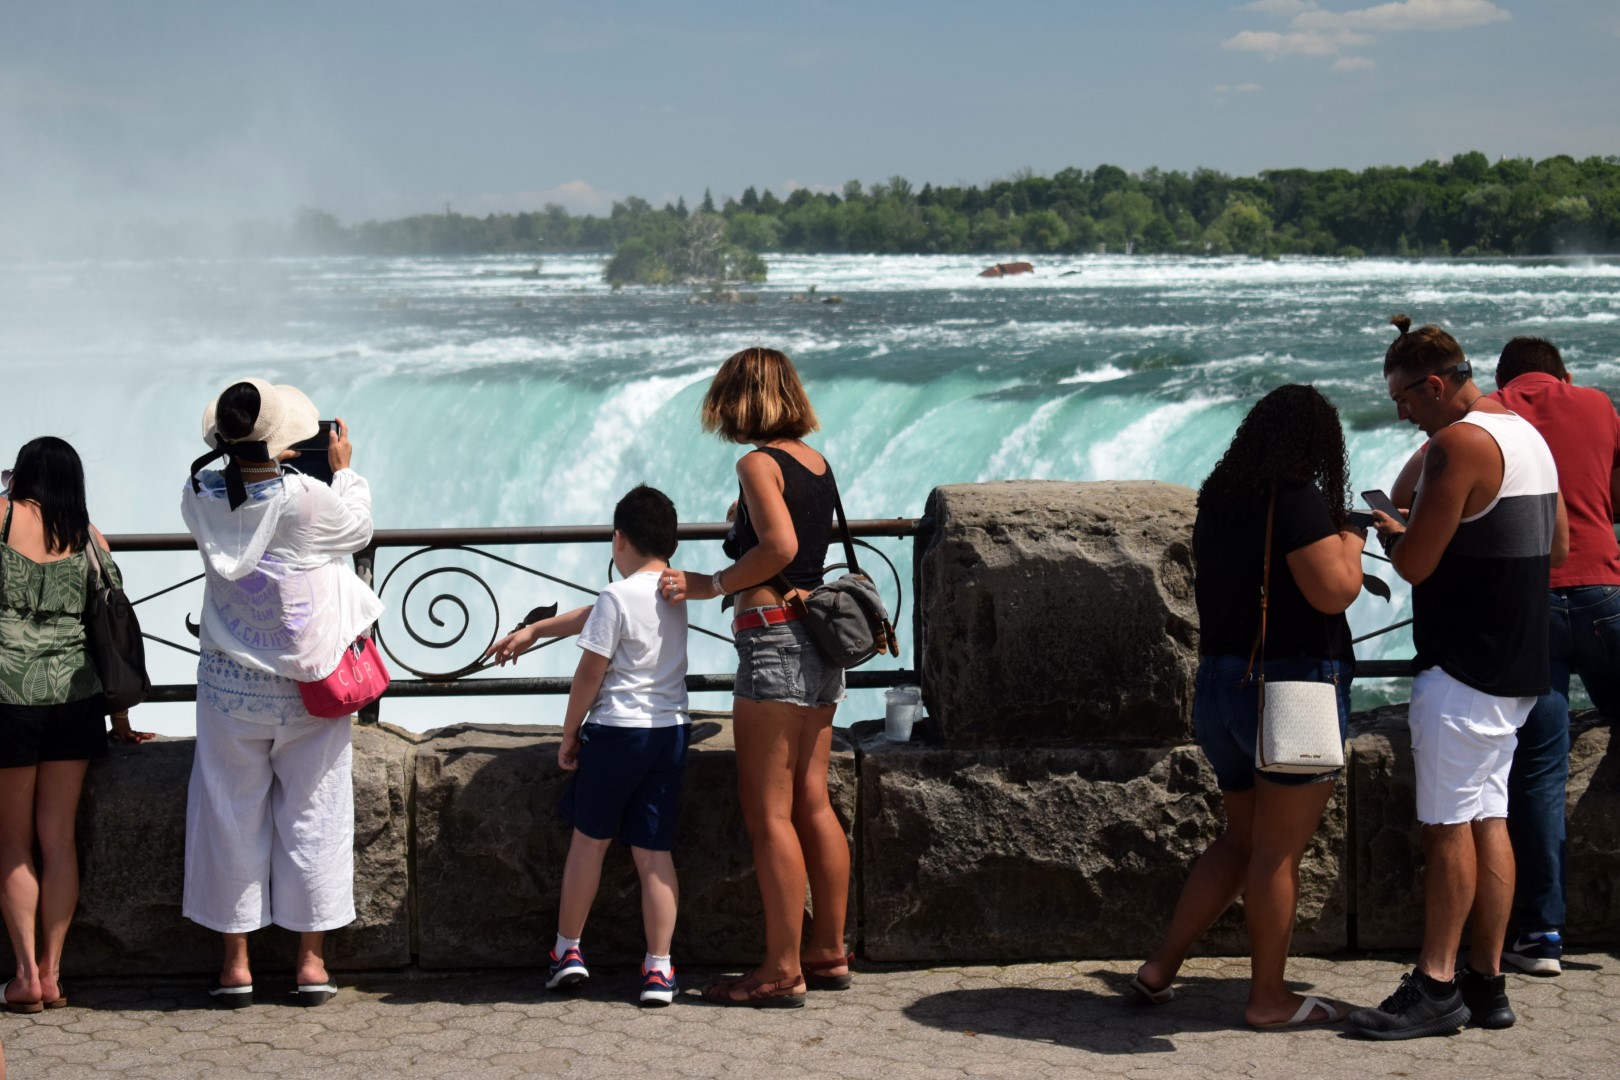 Horseshoe Falls, Niagara Parkway, Niagara Falls